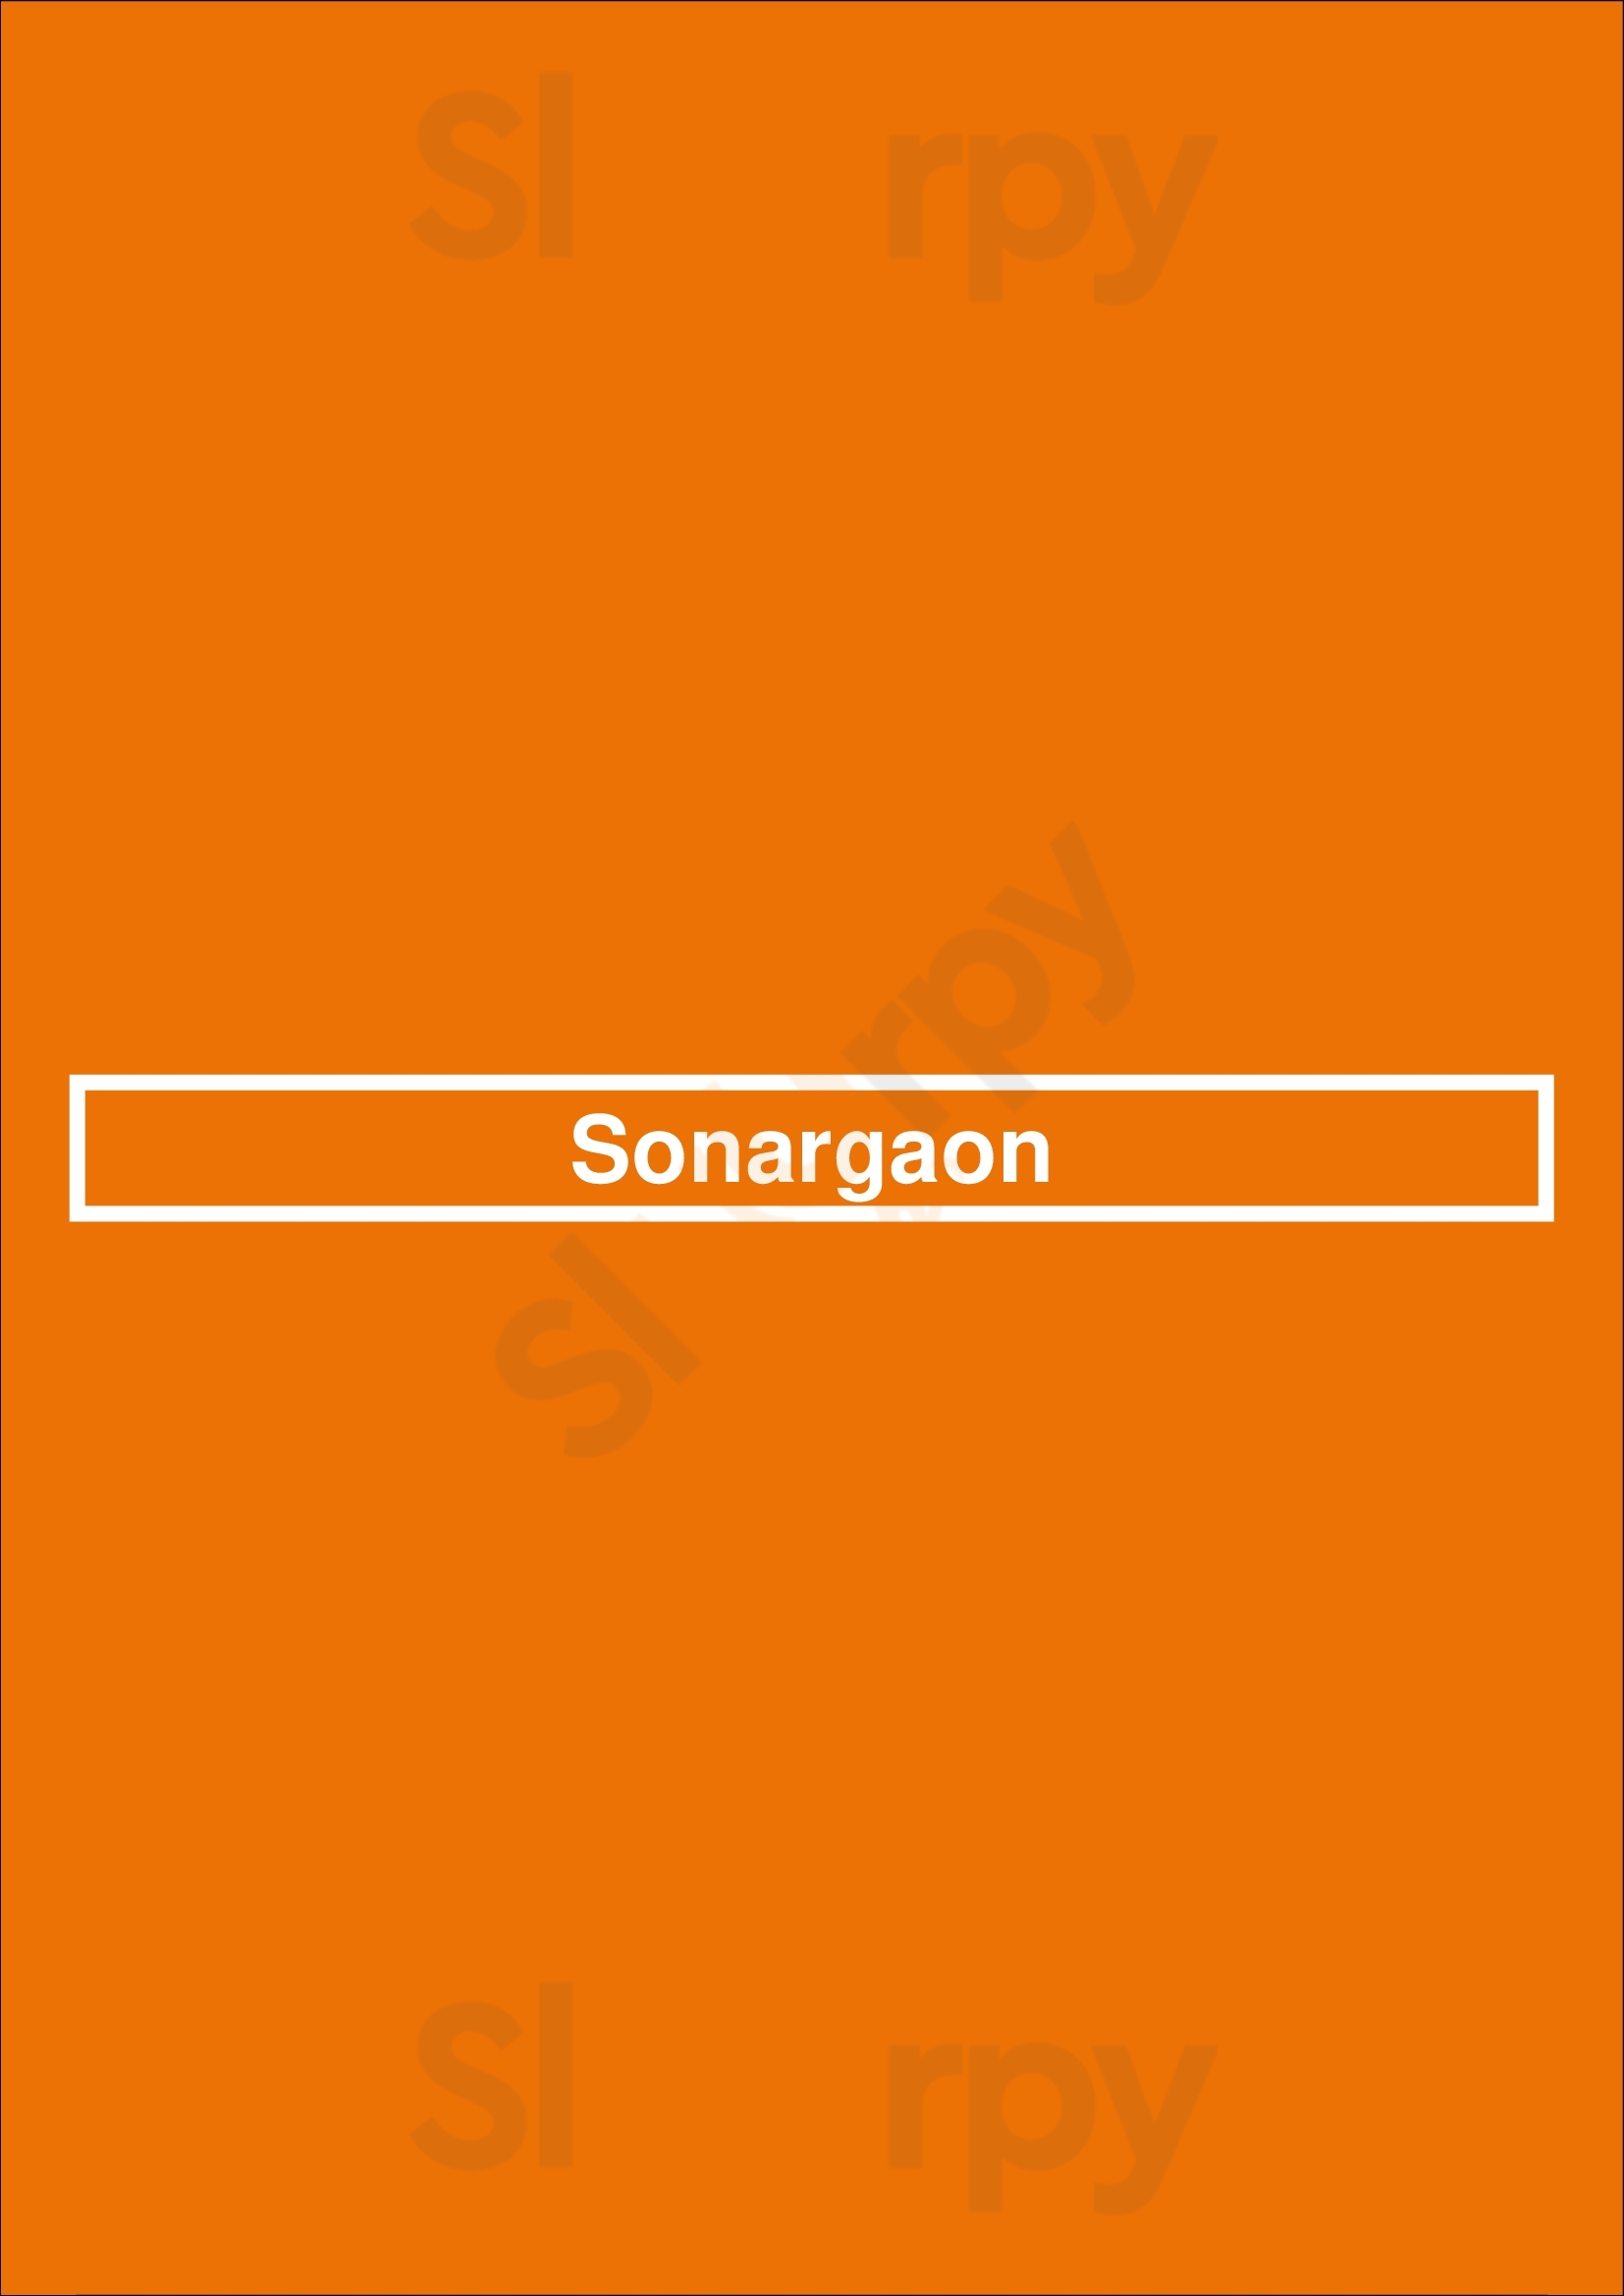 Sonargaon Neston Menu - 1